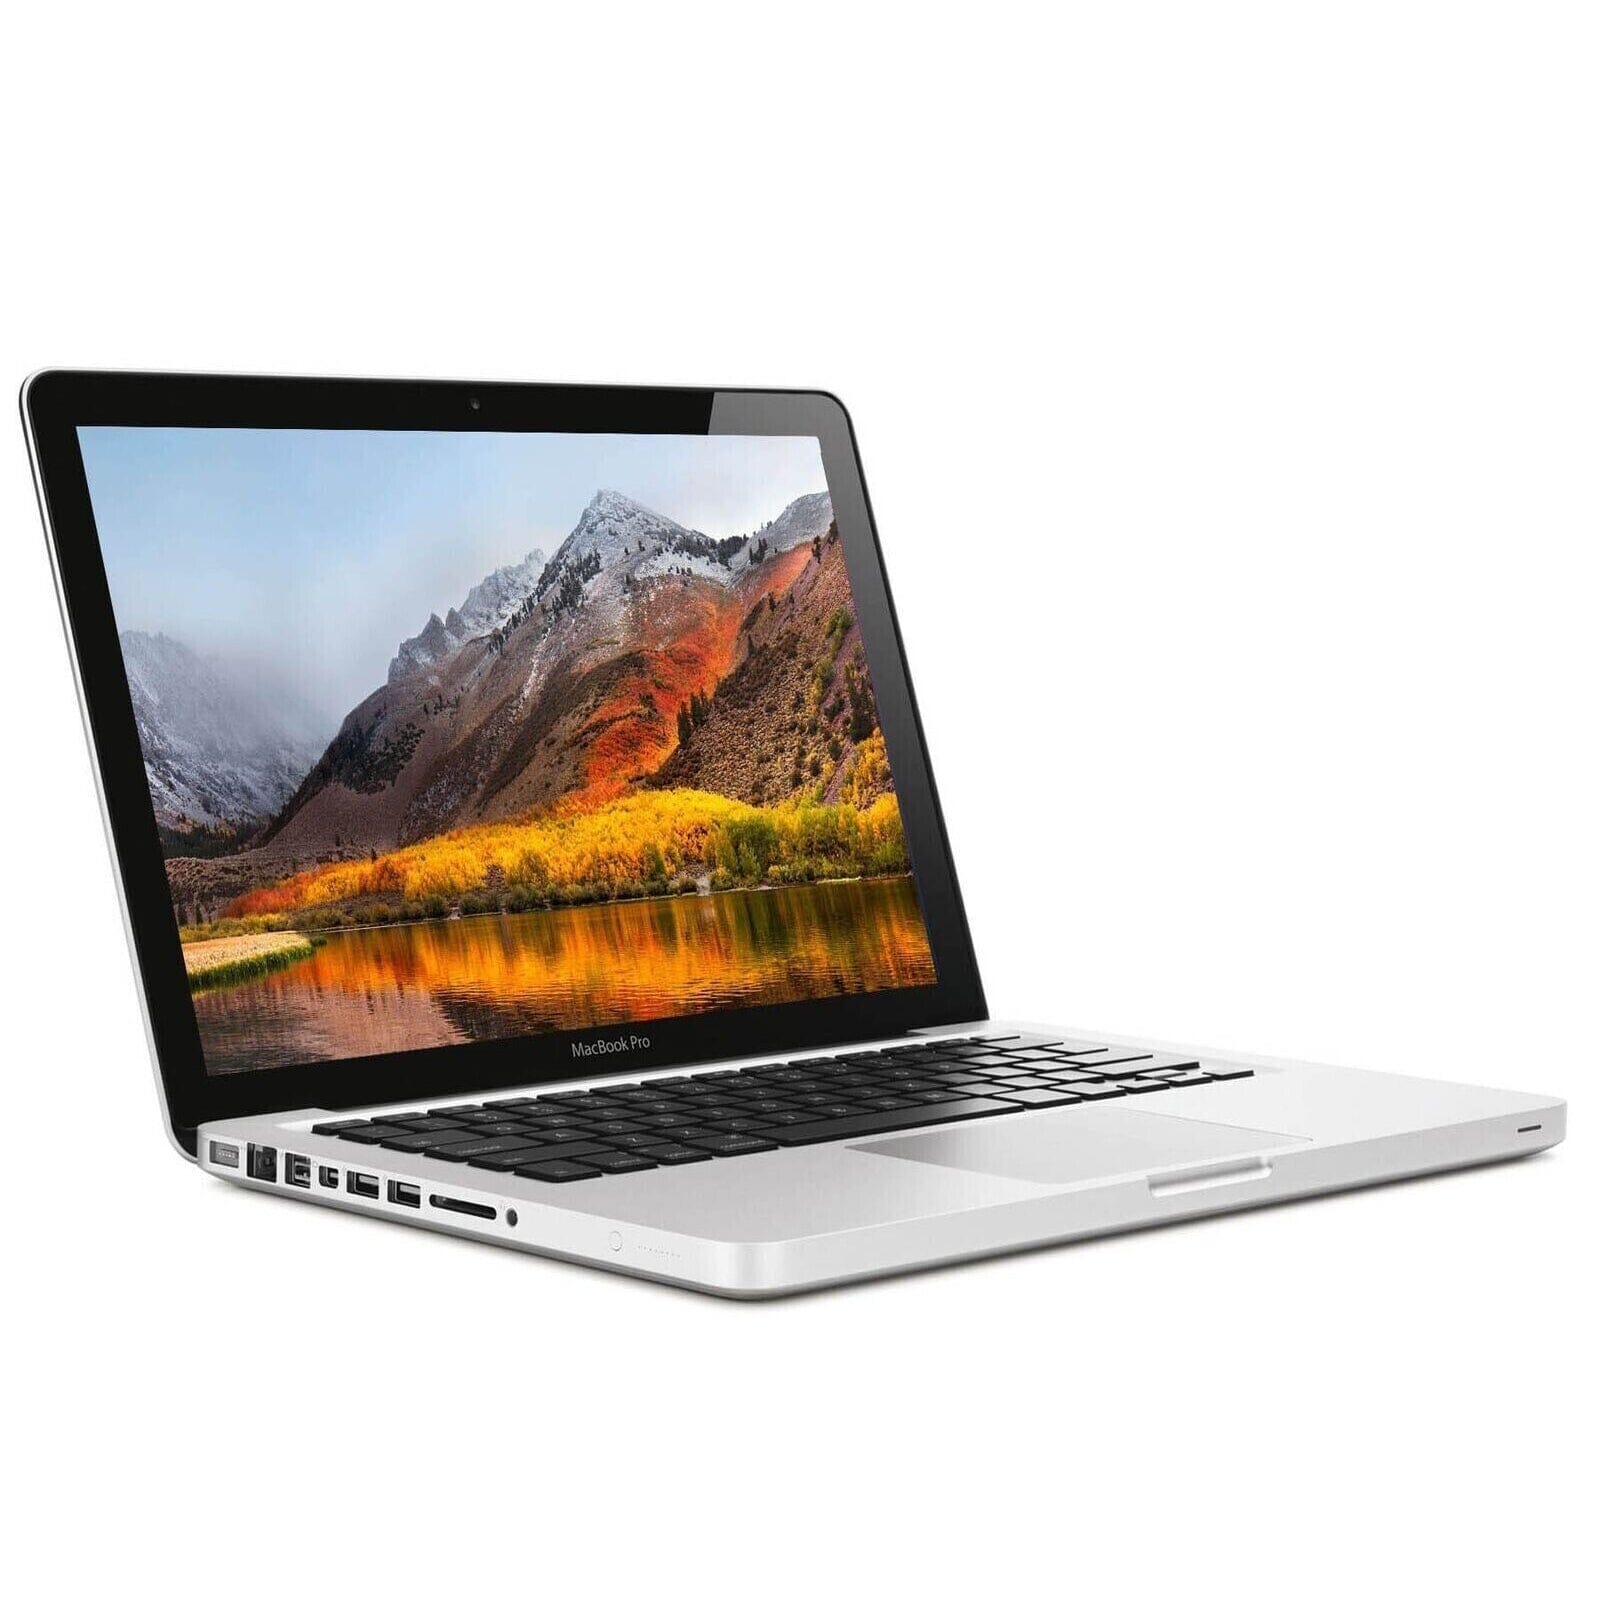 Apple Macbook Pro 13 MC374LL/A Mid 2010 A1278 Core 2 DUO 2.26GHz 4GB 3